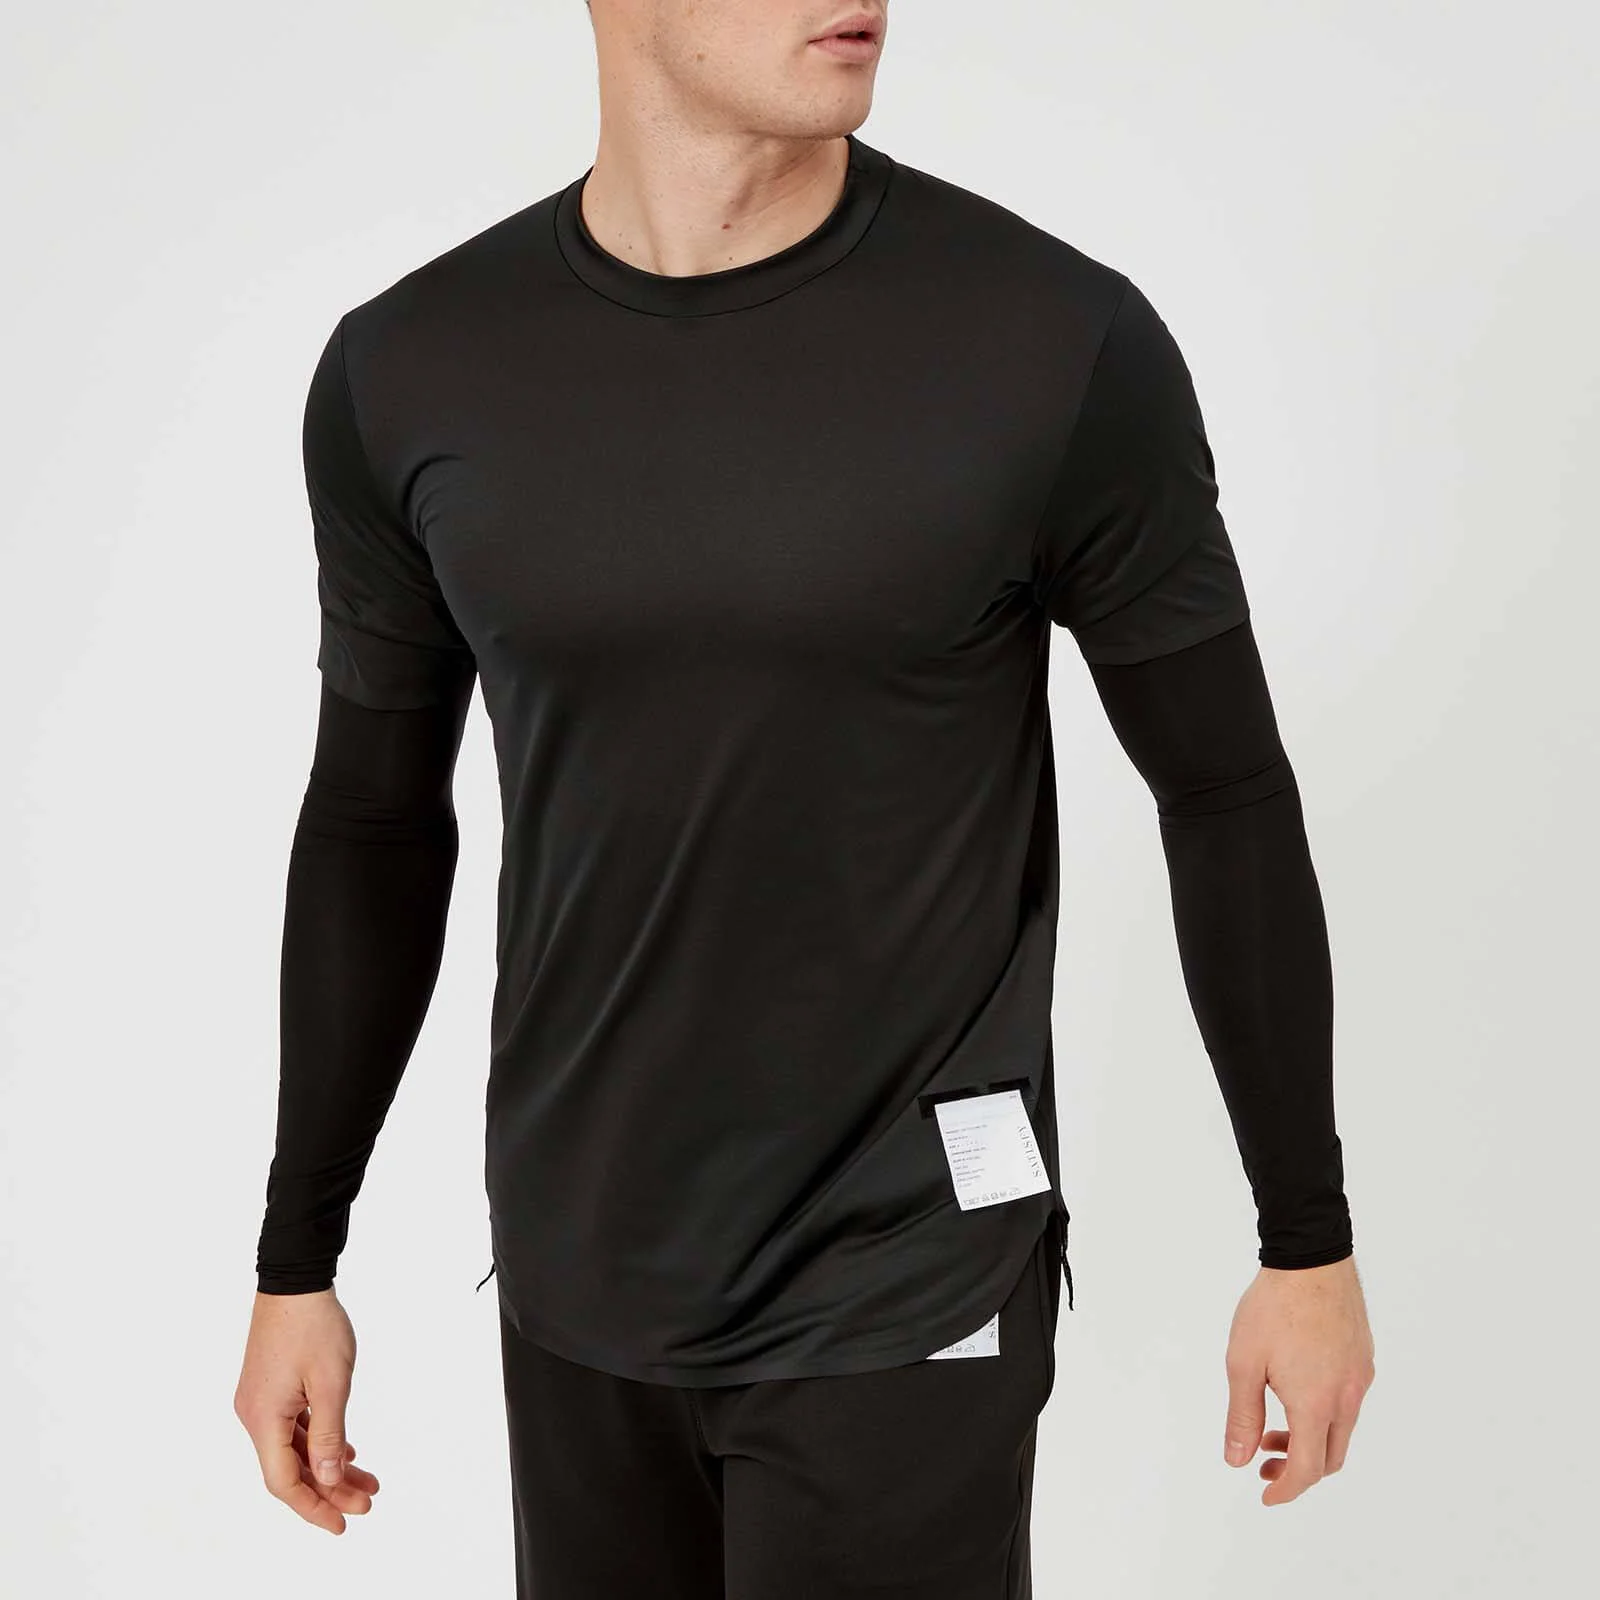 Satisfy Men's Justice Long Short Sleeve T-Shirt - Black Image 1